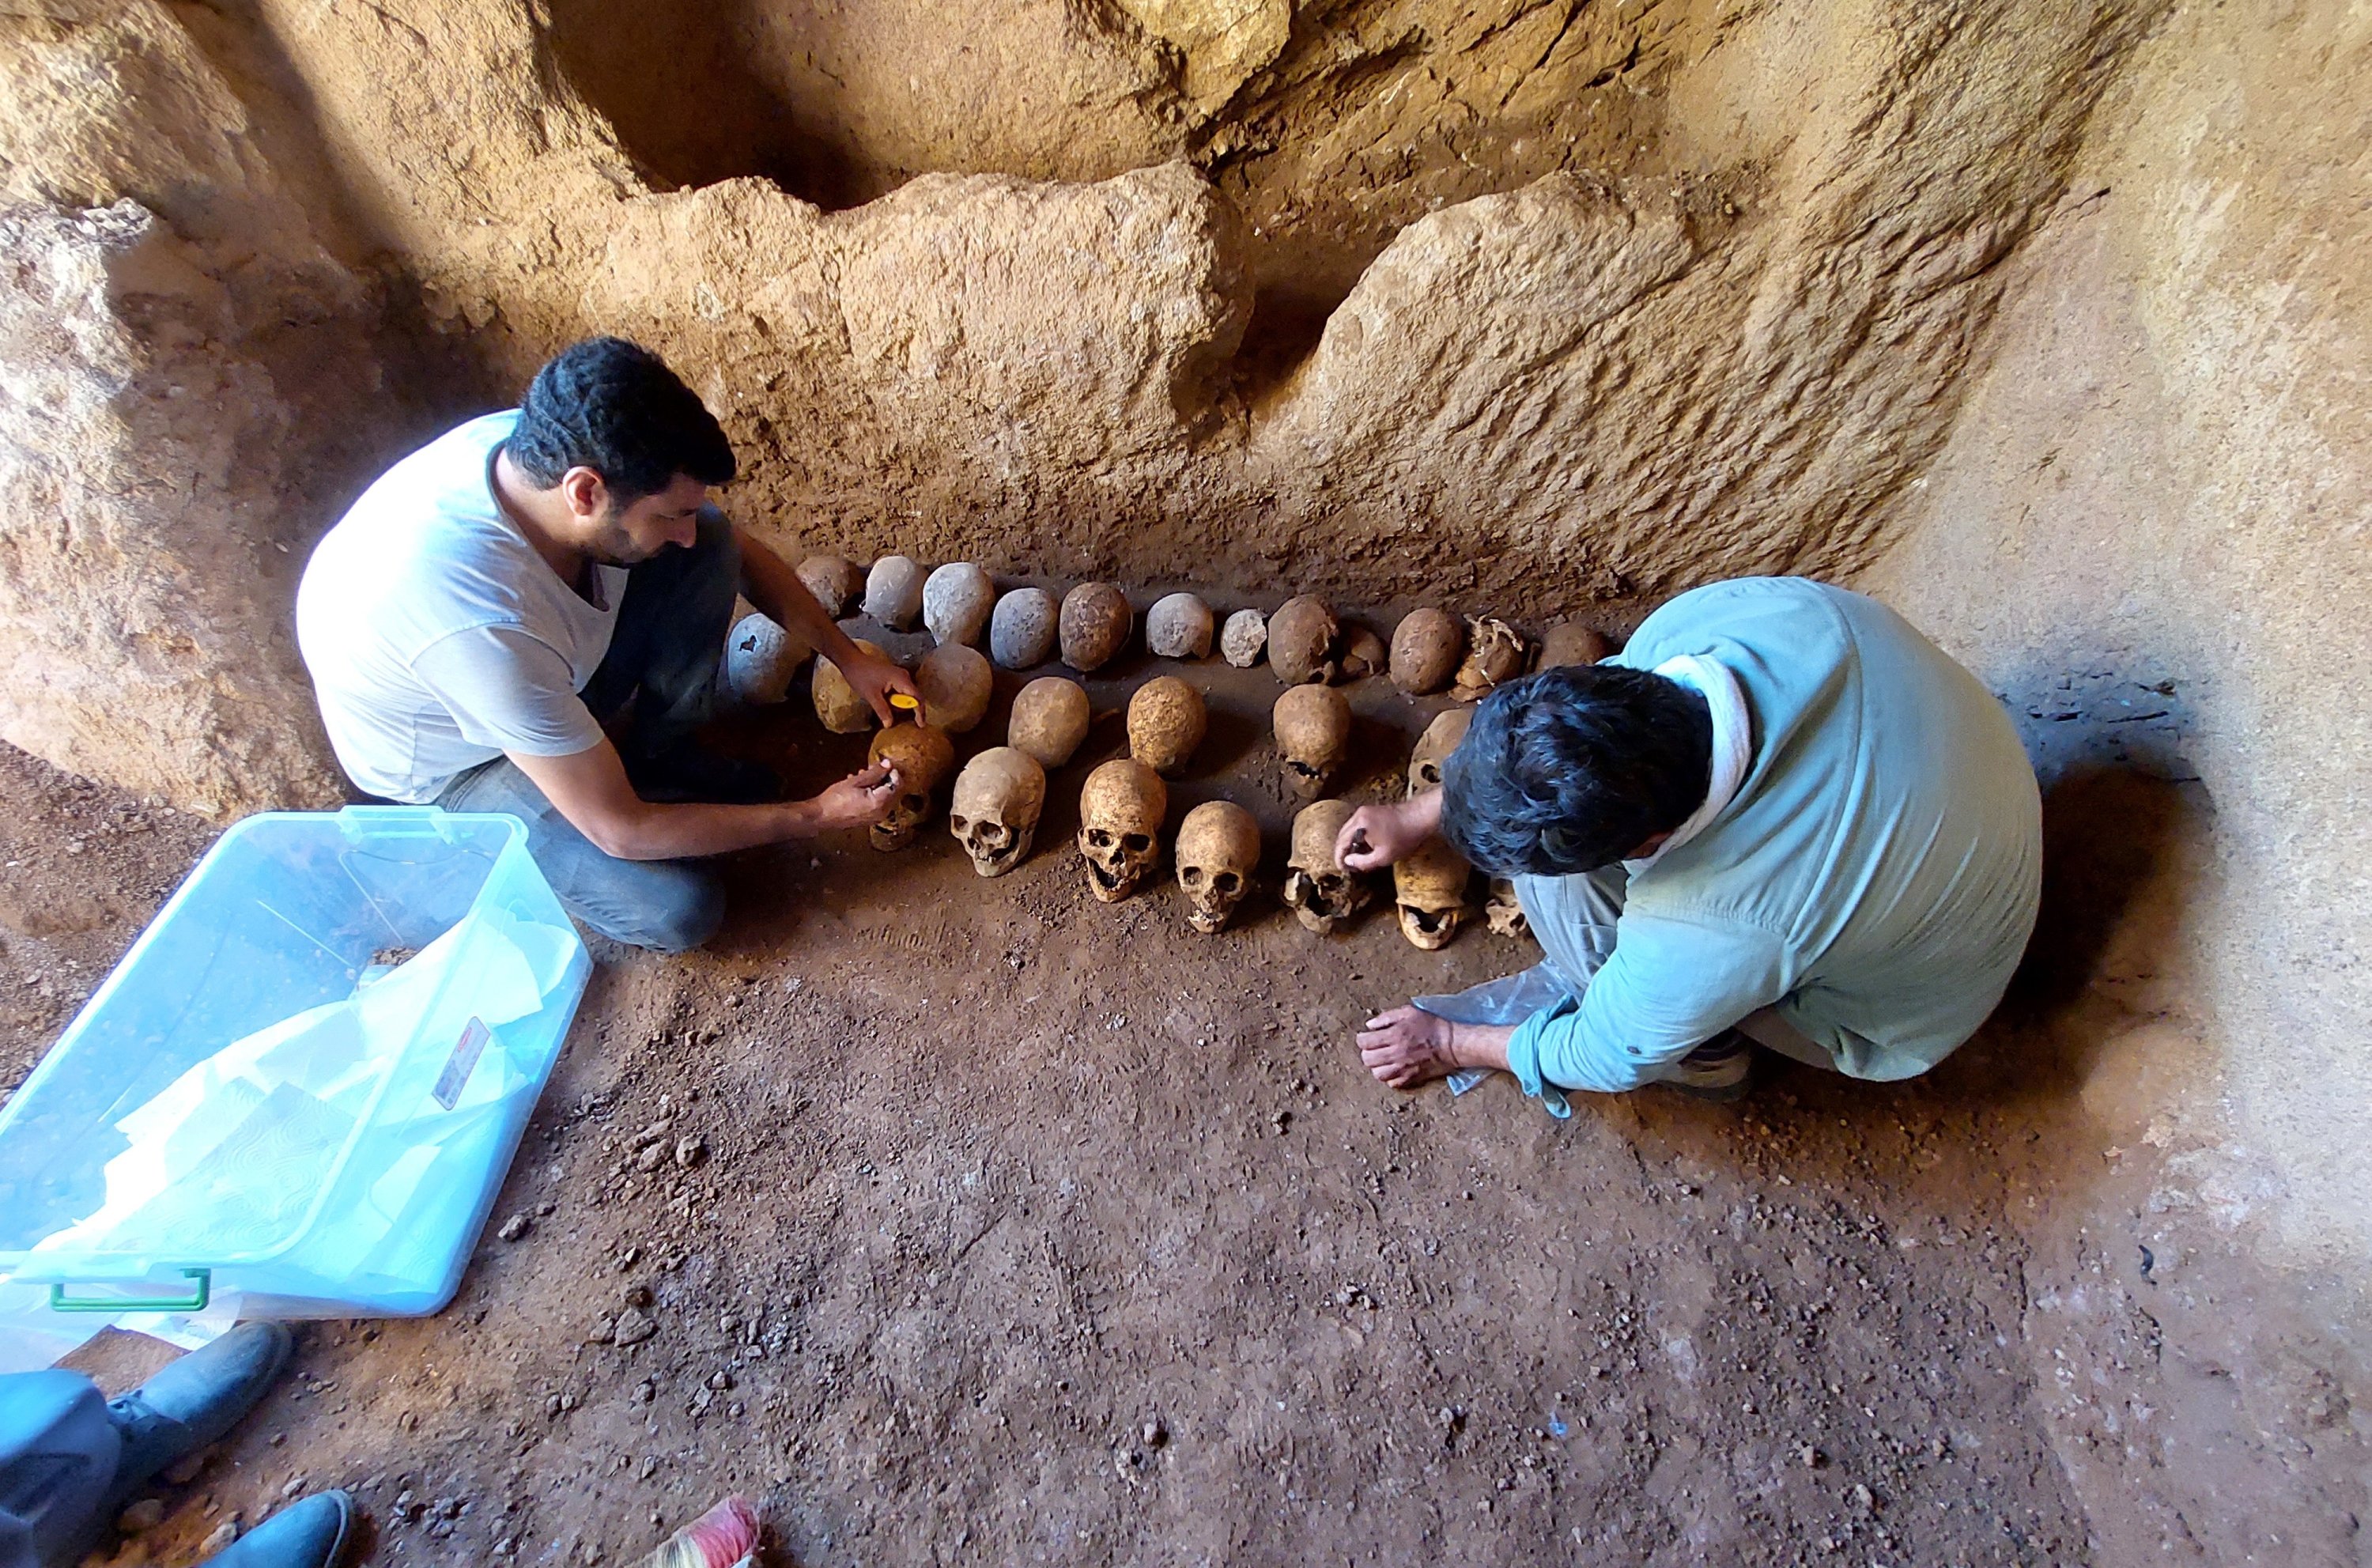 Experts examine skulls found in the grave, in Adiyaman, eastern Turkey, July 28, 2022. (IHA PHOTO)